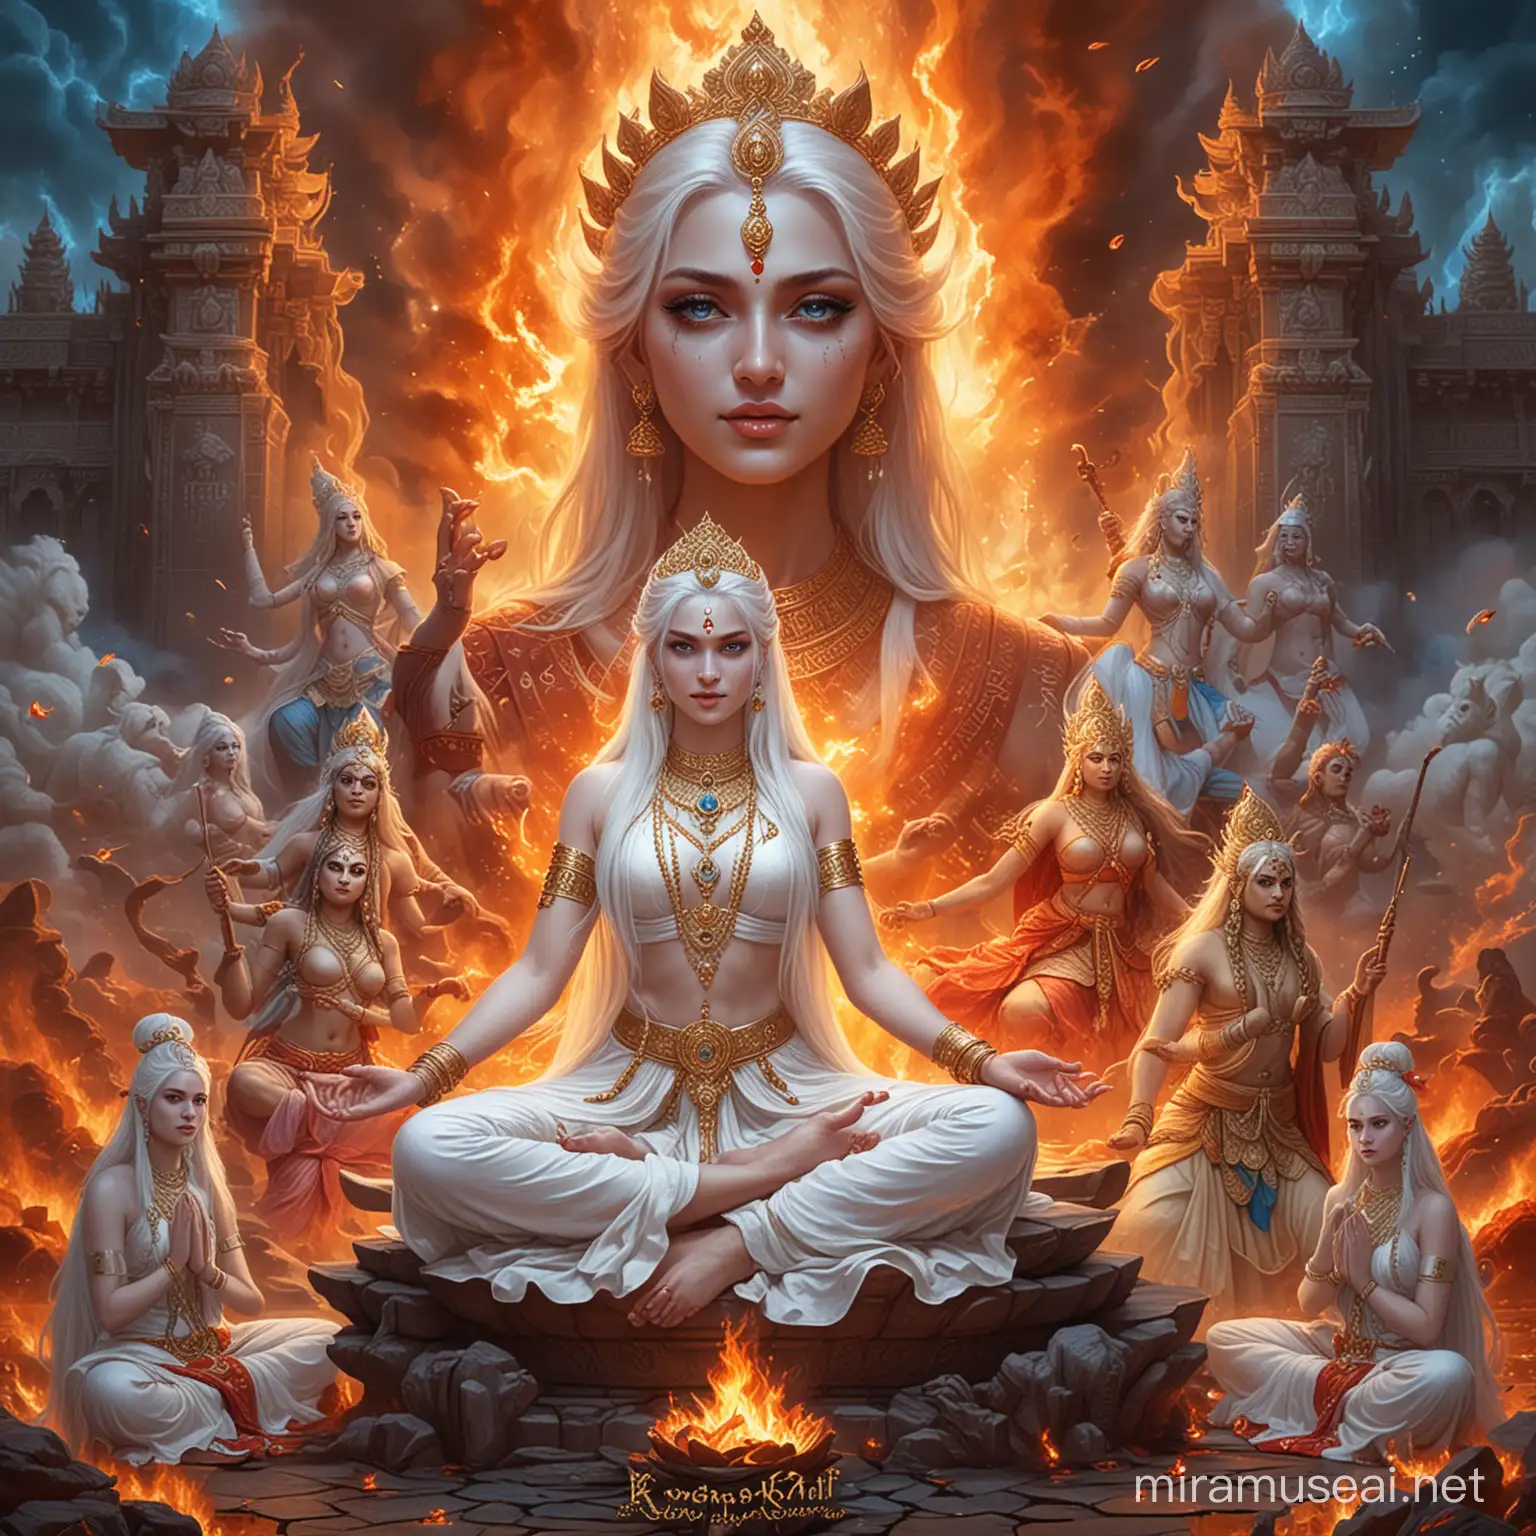 Kayashiel Kali Dynasty Empress Goddess in Battle Amidst Demonic Deities